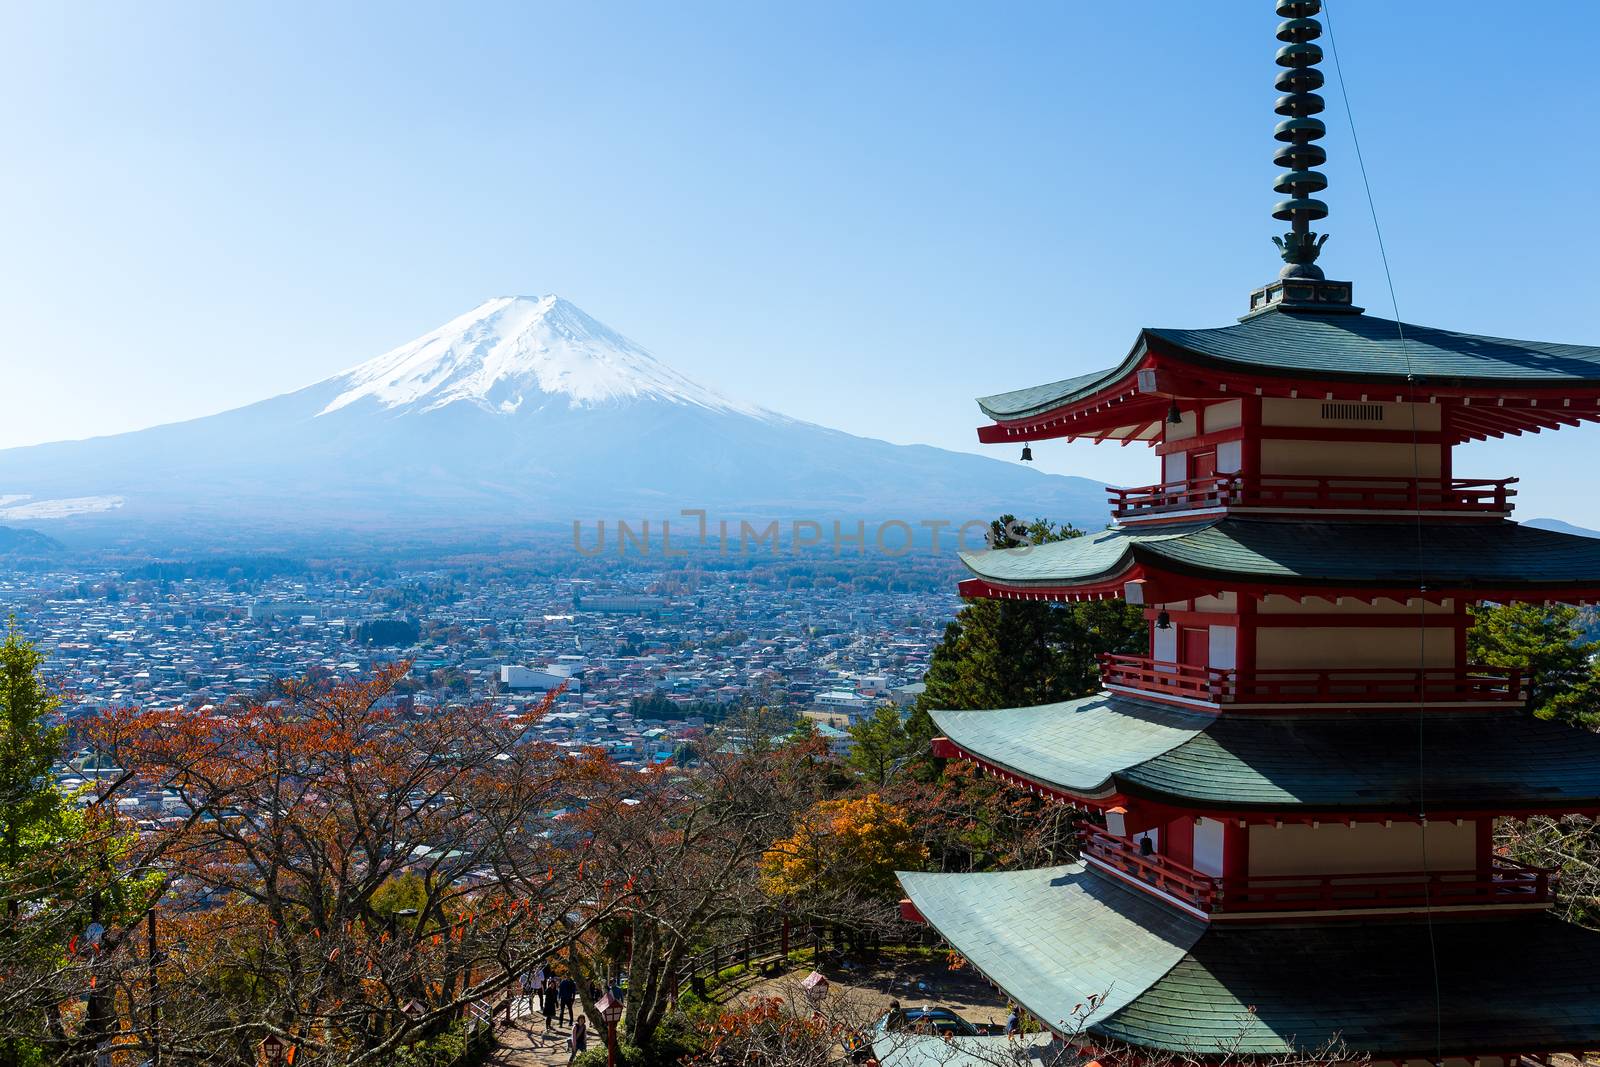 Mountain Fuji and Chureito red pagoda